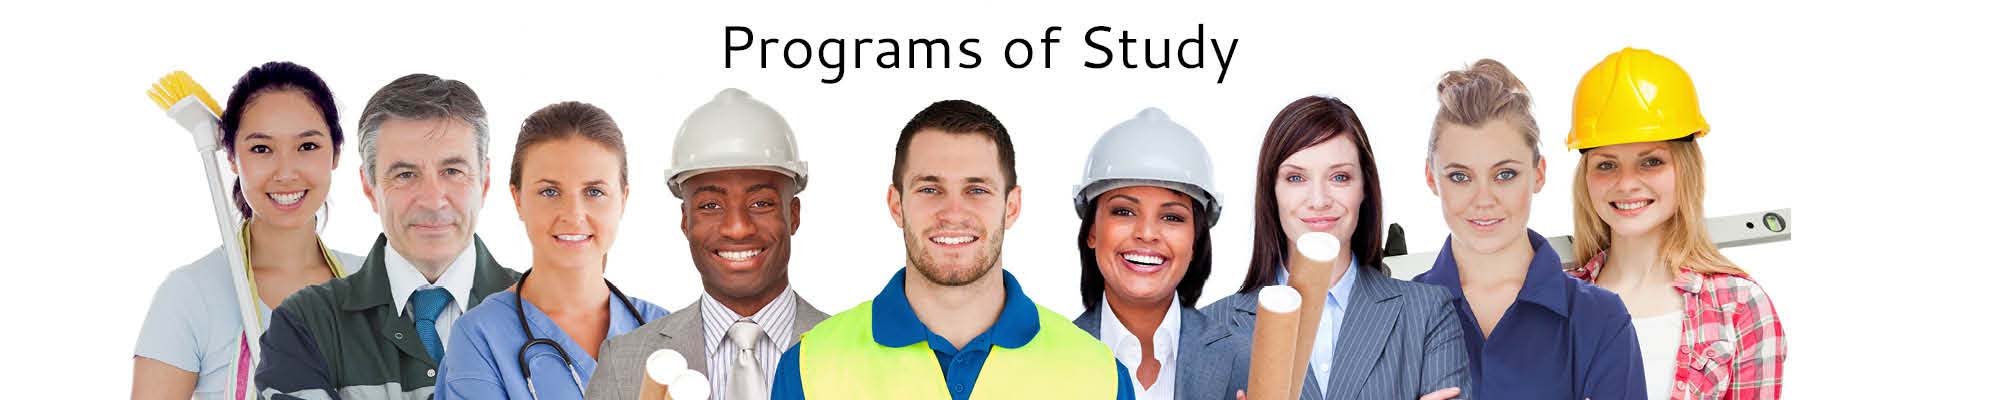 Programs of Study header image